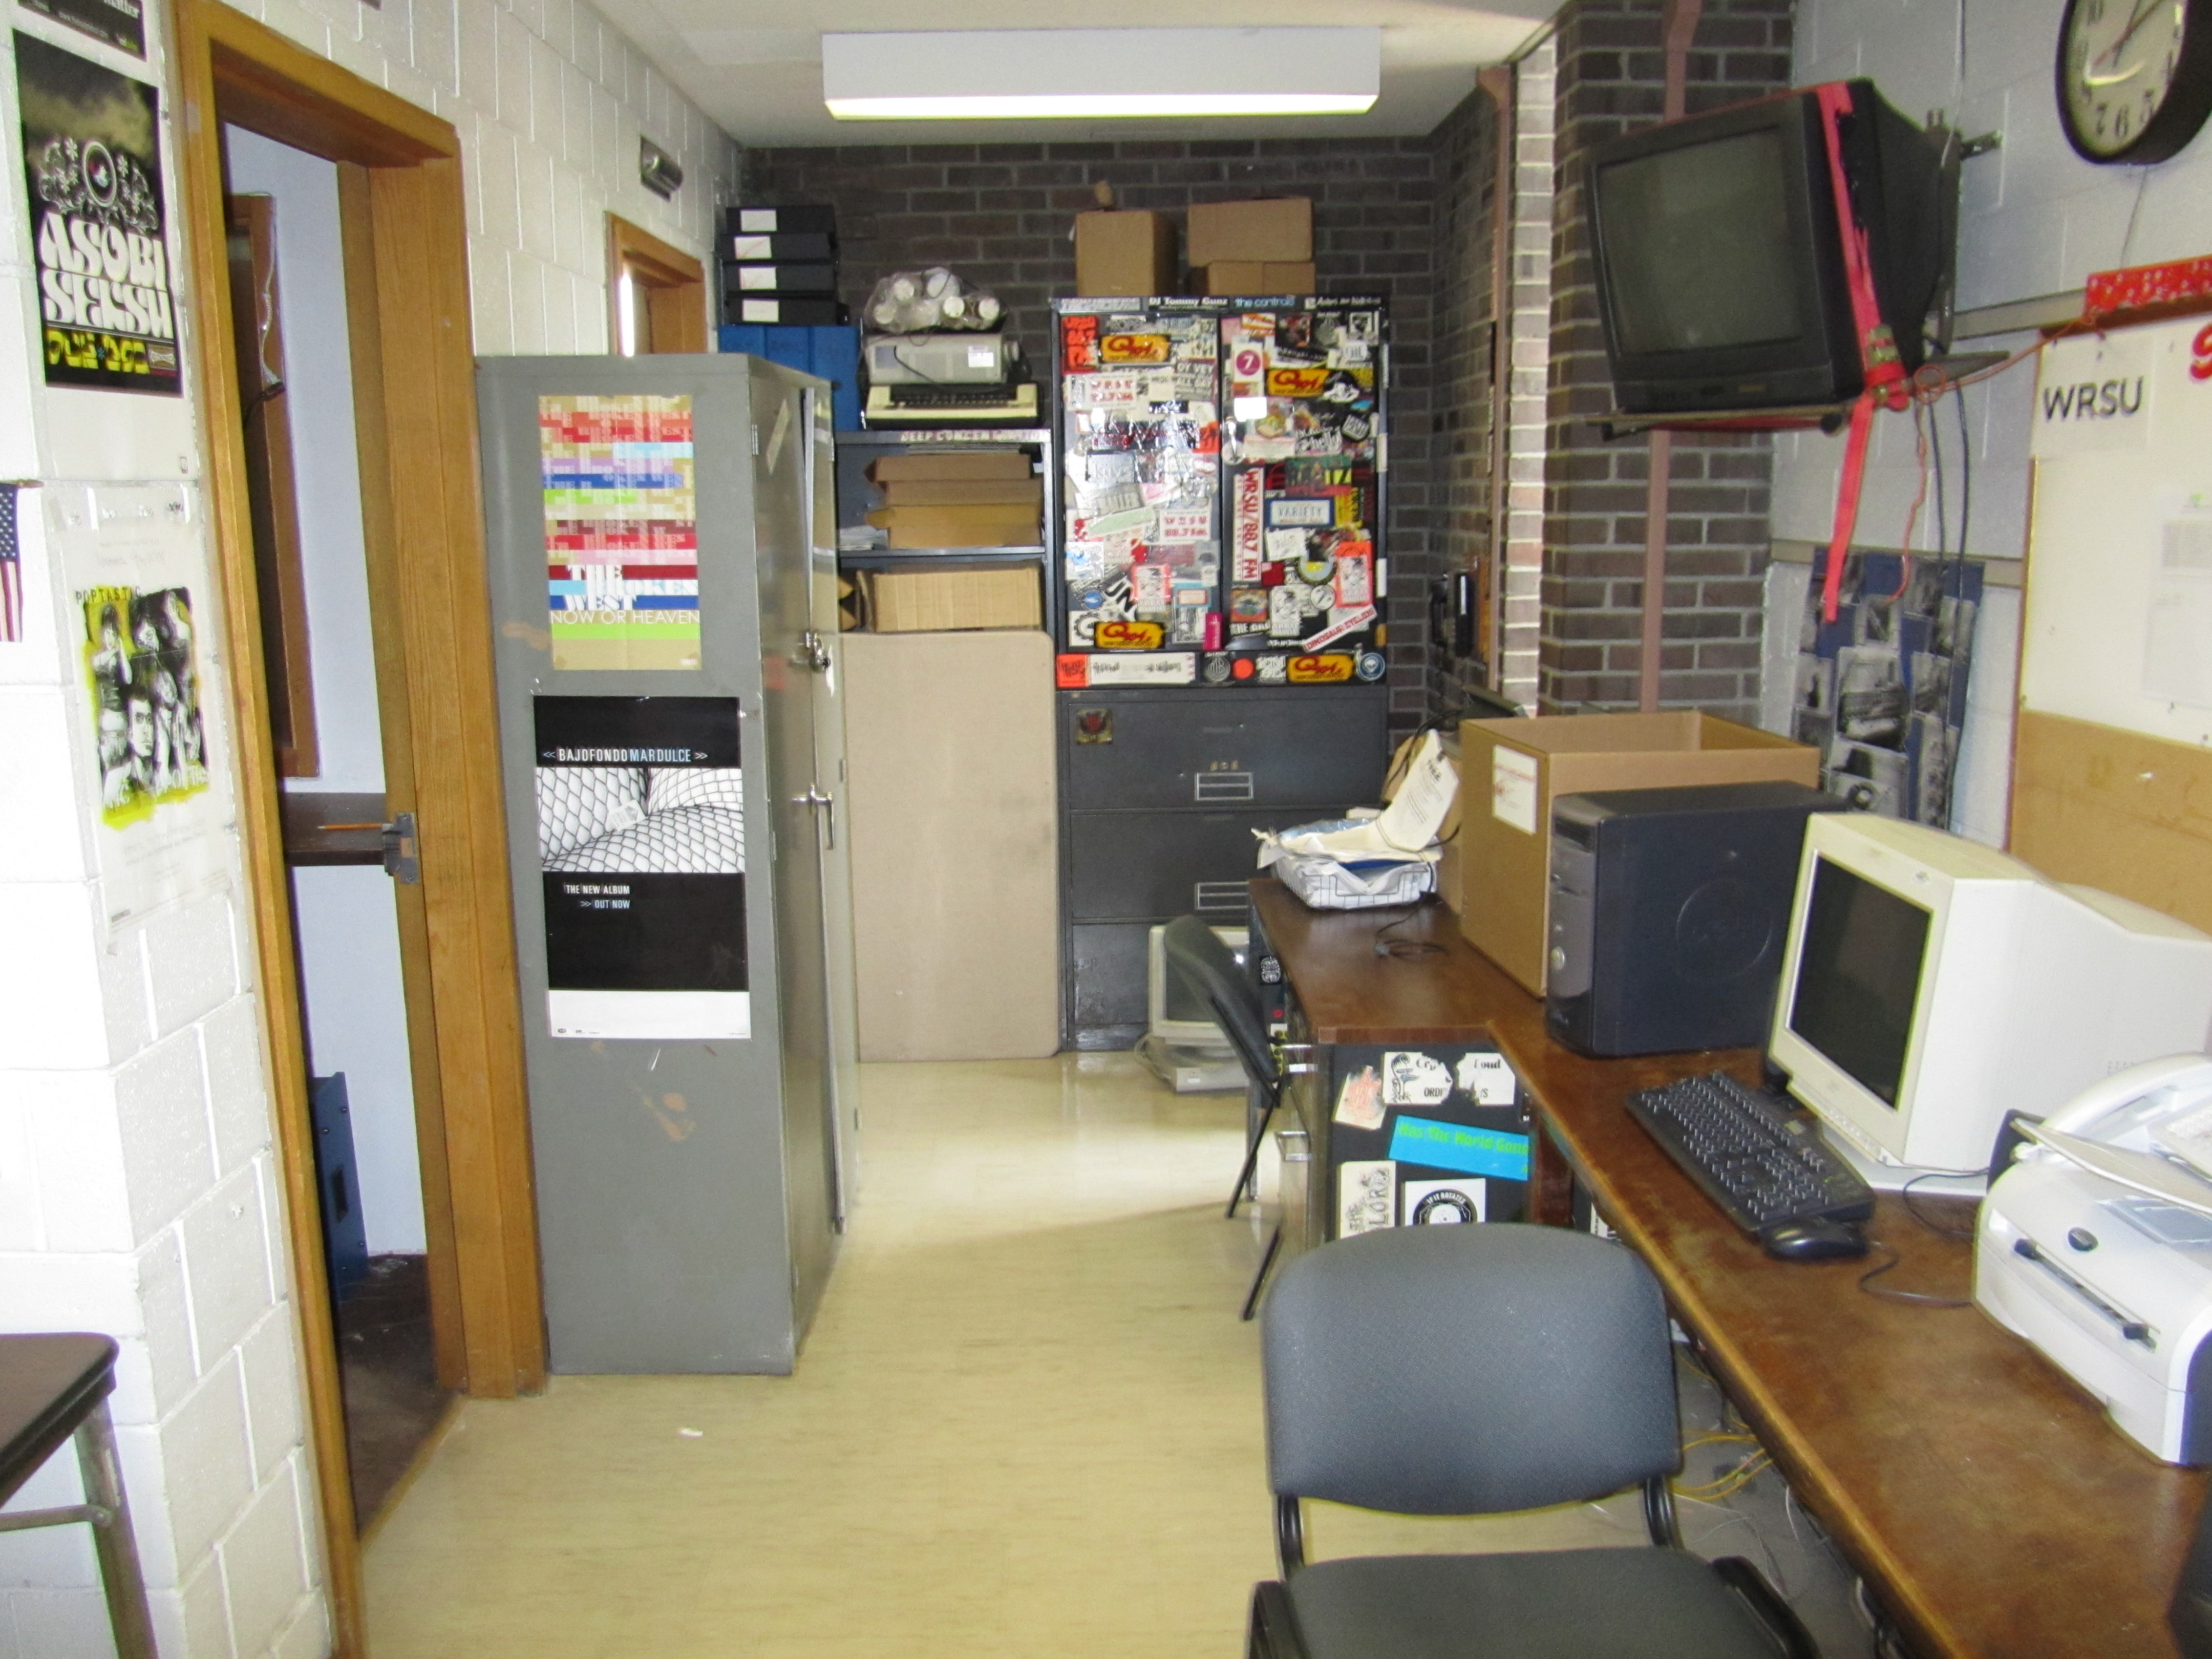 2010 News Room